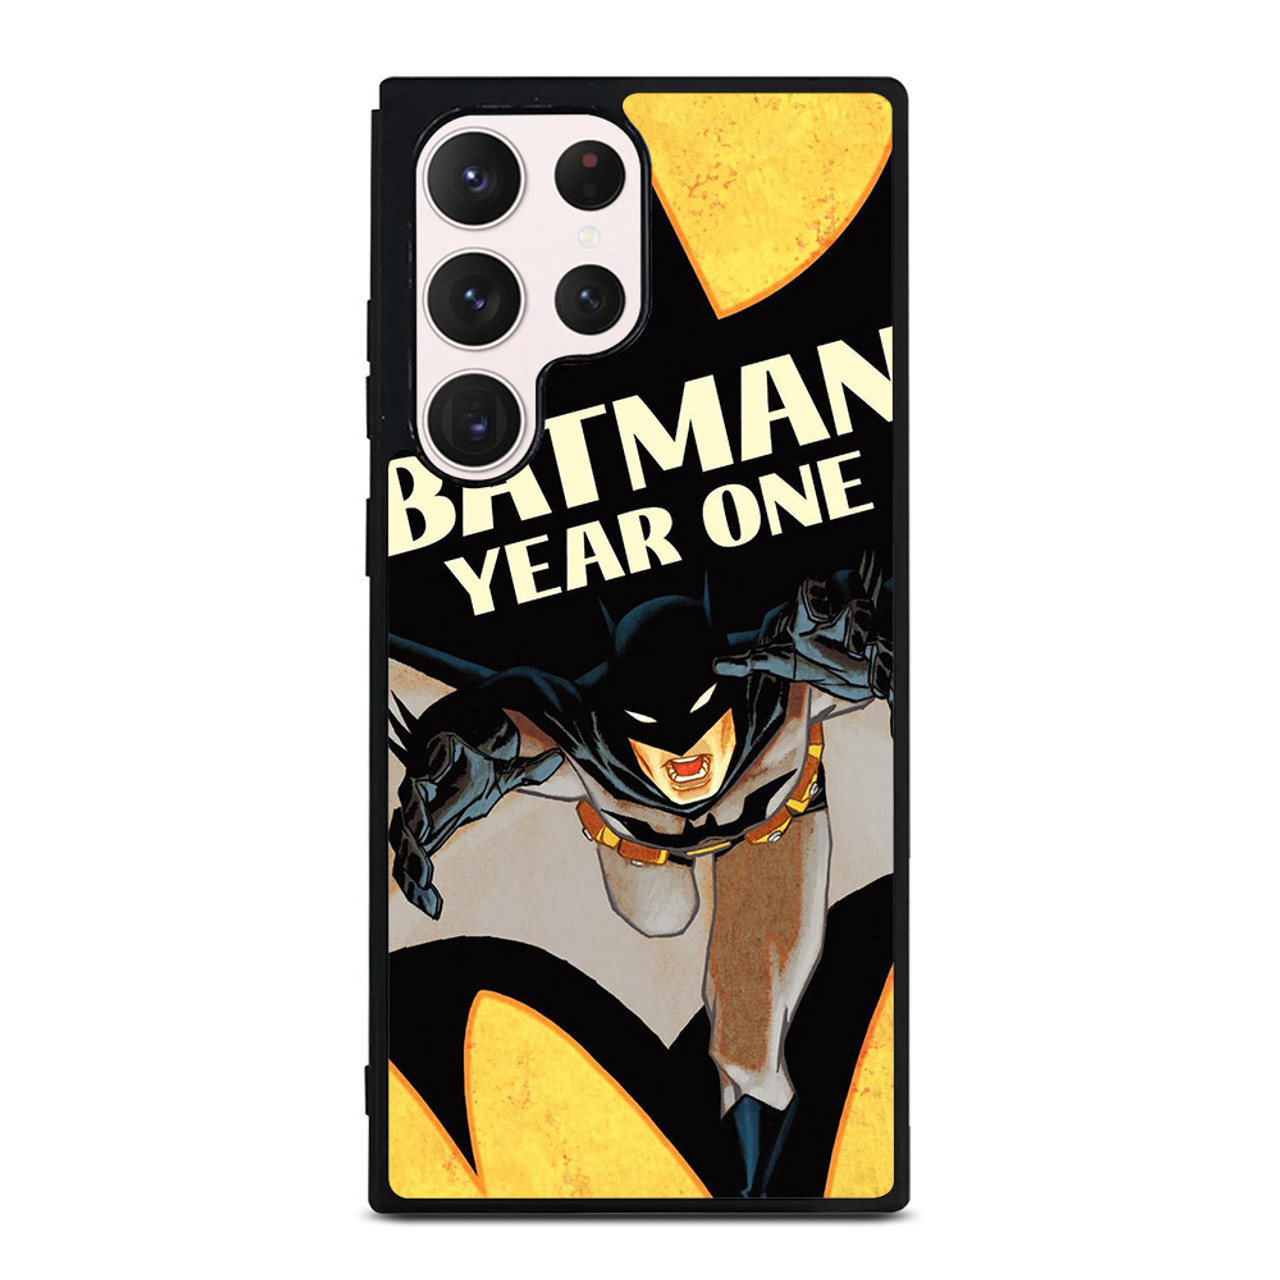 BATMAN YEAR ONE Samsung Galaxy S23 Ultra Case Cover